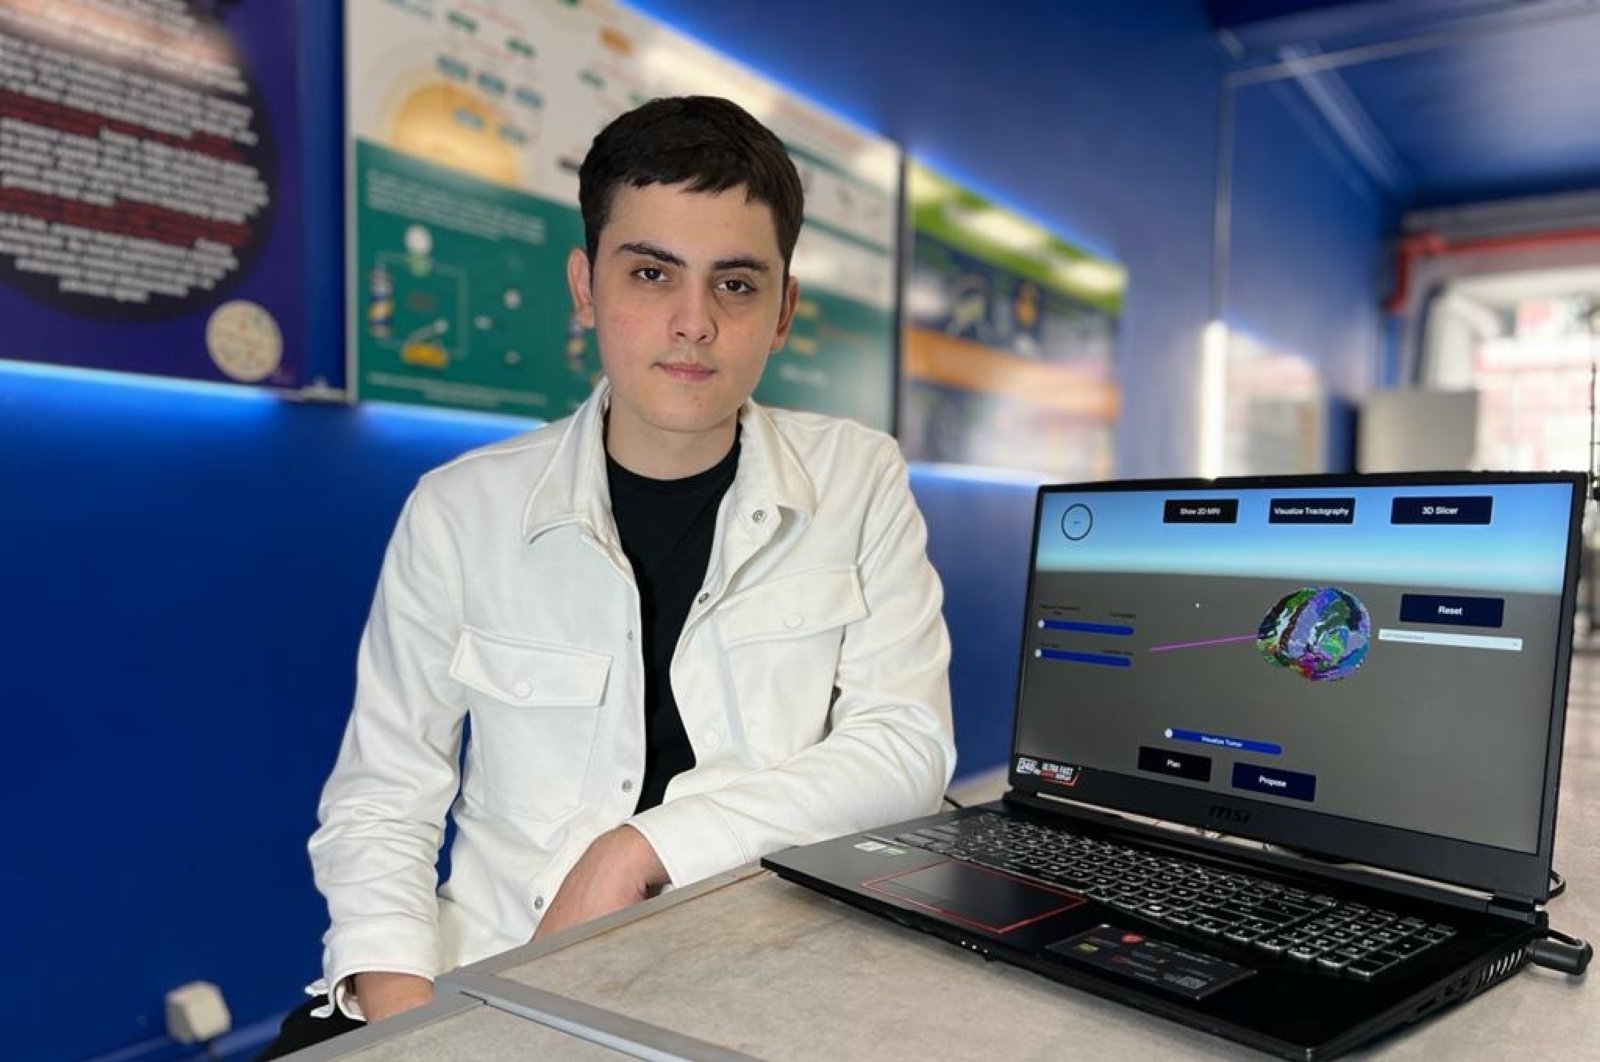 Siswa sekolah menengah Turki mengembangkan AI untuk membantu ahli bedah otak